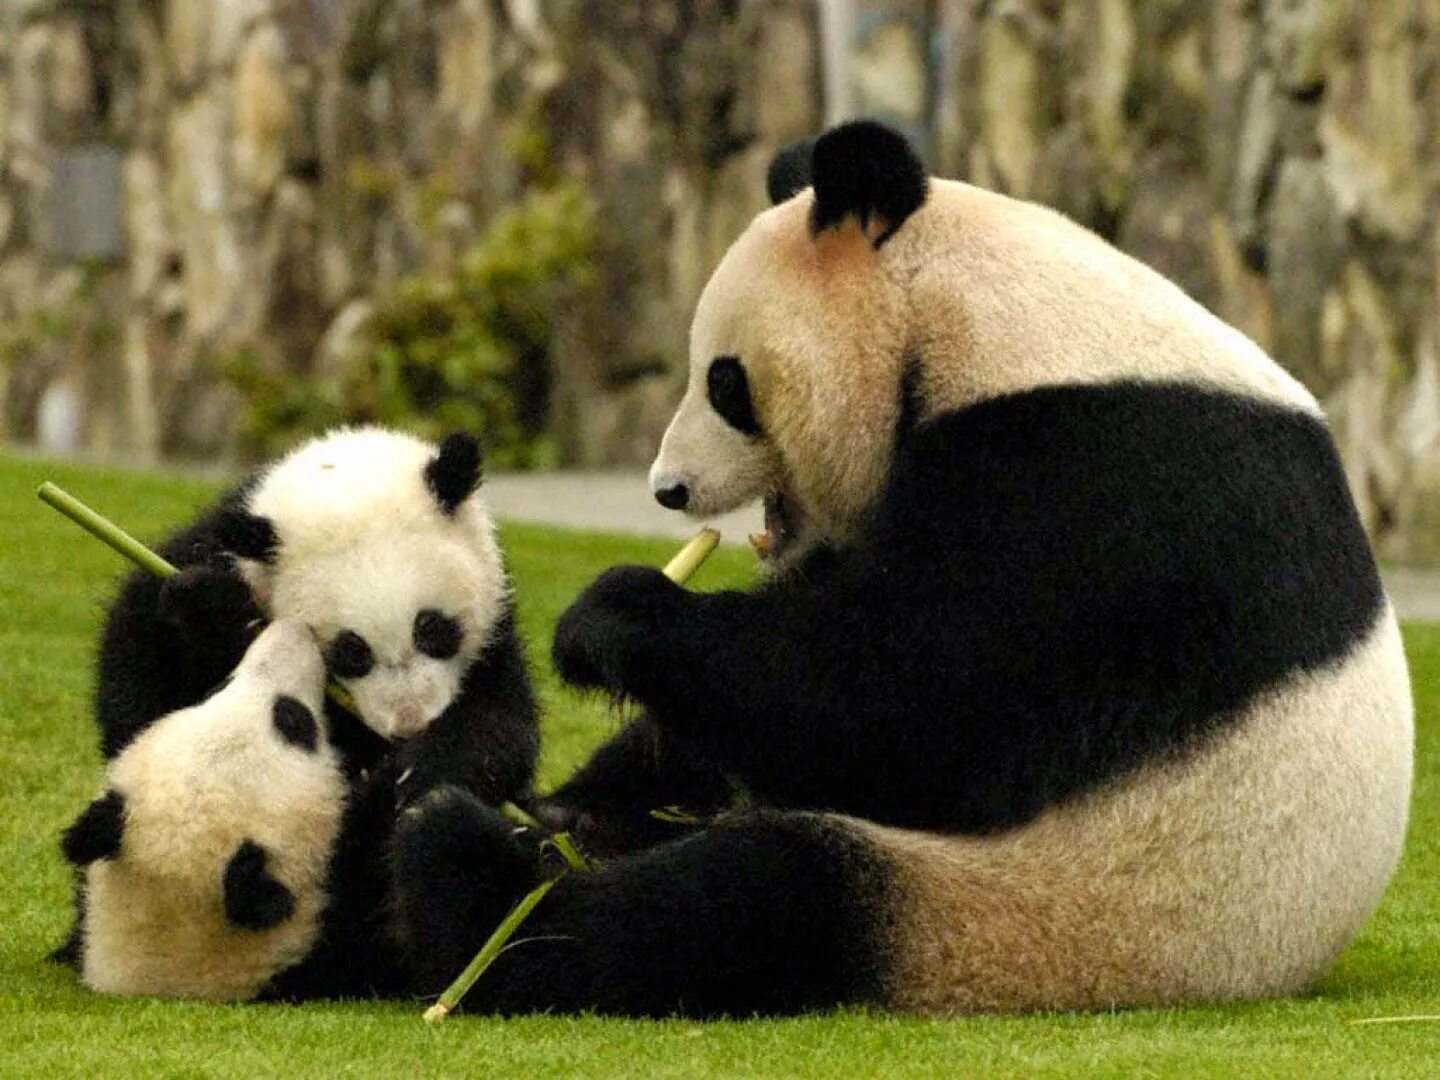 Панда таджикски. Панда бамбуковый медведь. Большая бамбуковая Панда. Большая Панда или бамбуковый медведь. Очковая Панда.